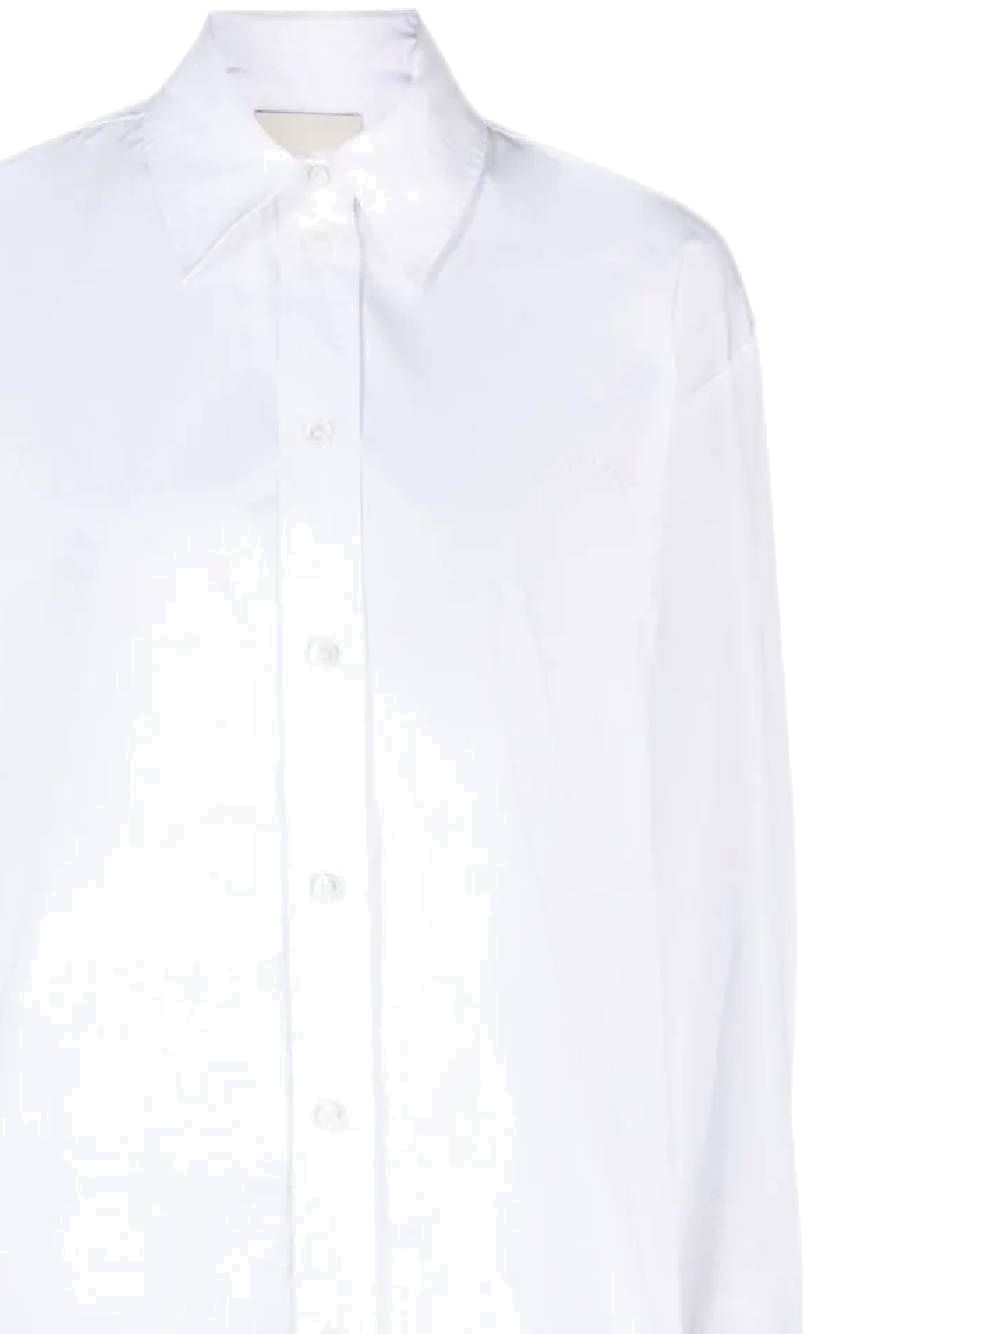 White cotton poplin fabric